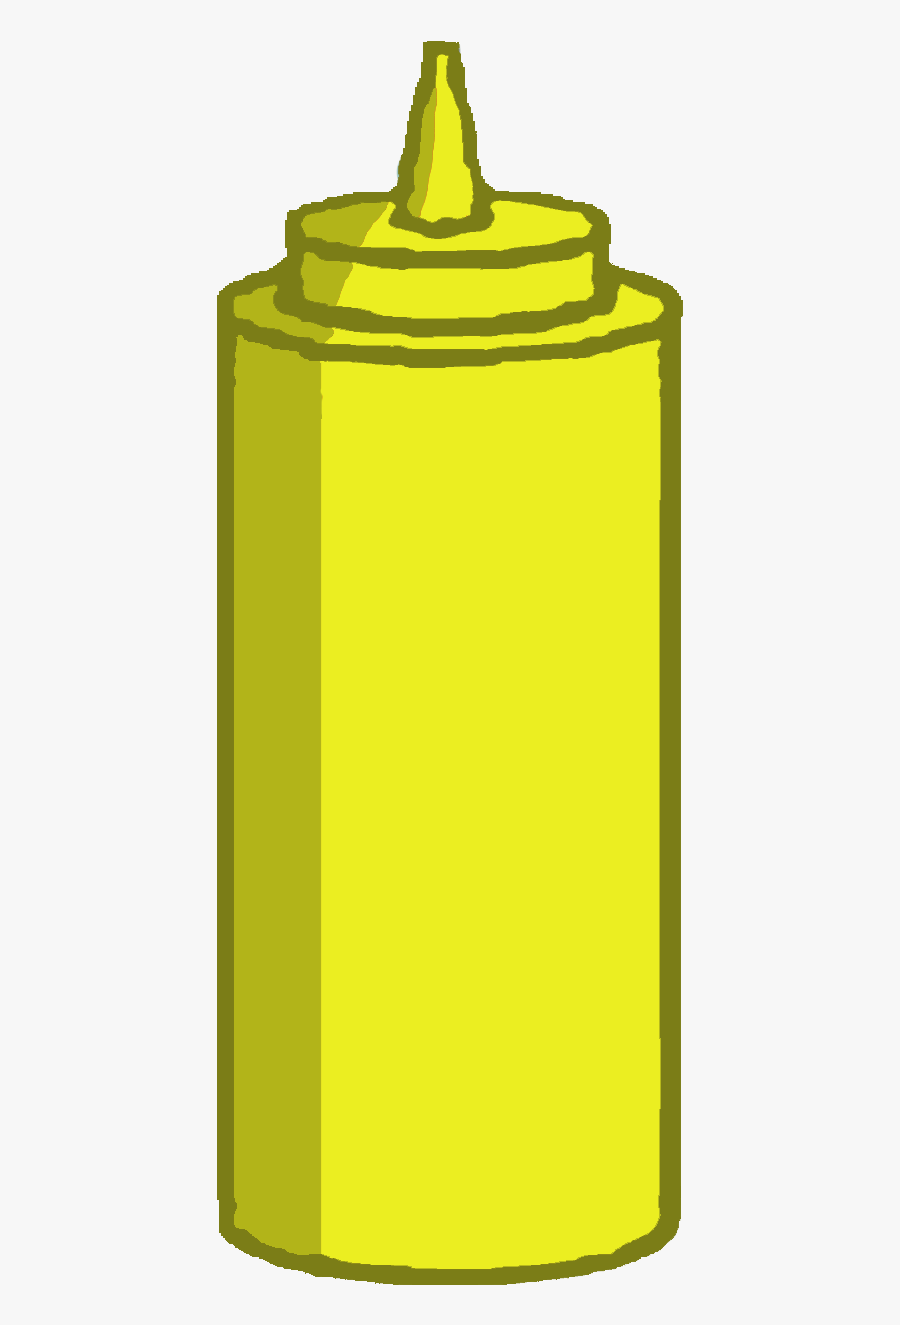 Image - Mustard Bottle Clipart Png, Transparent Clipart